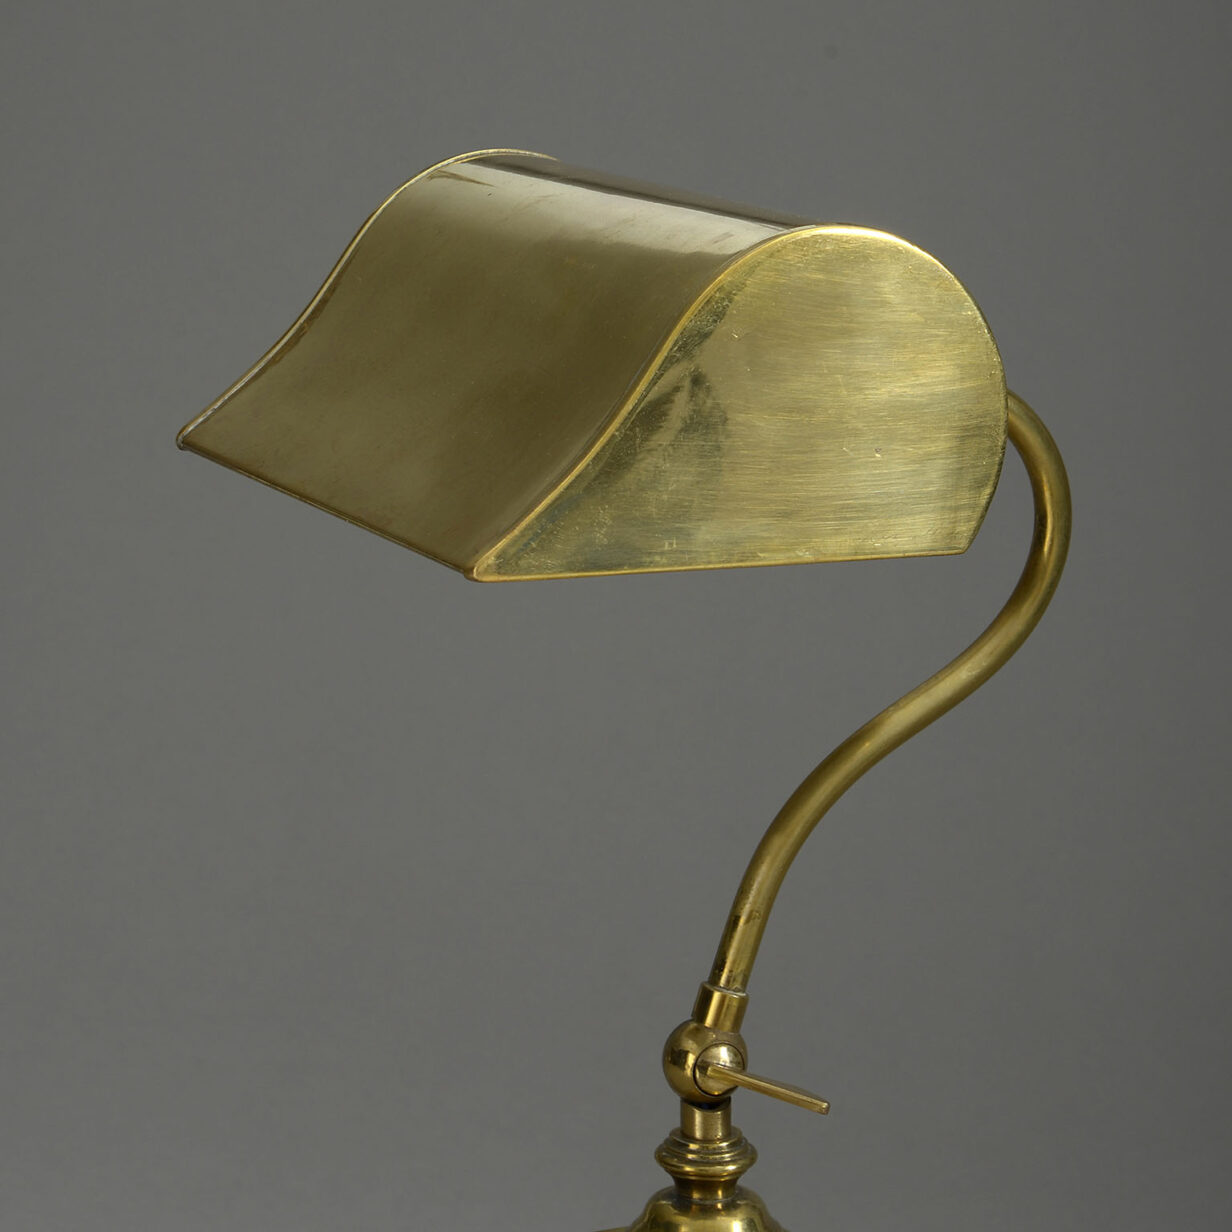 Early 20th century edwardian period brass desk lamp